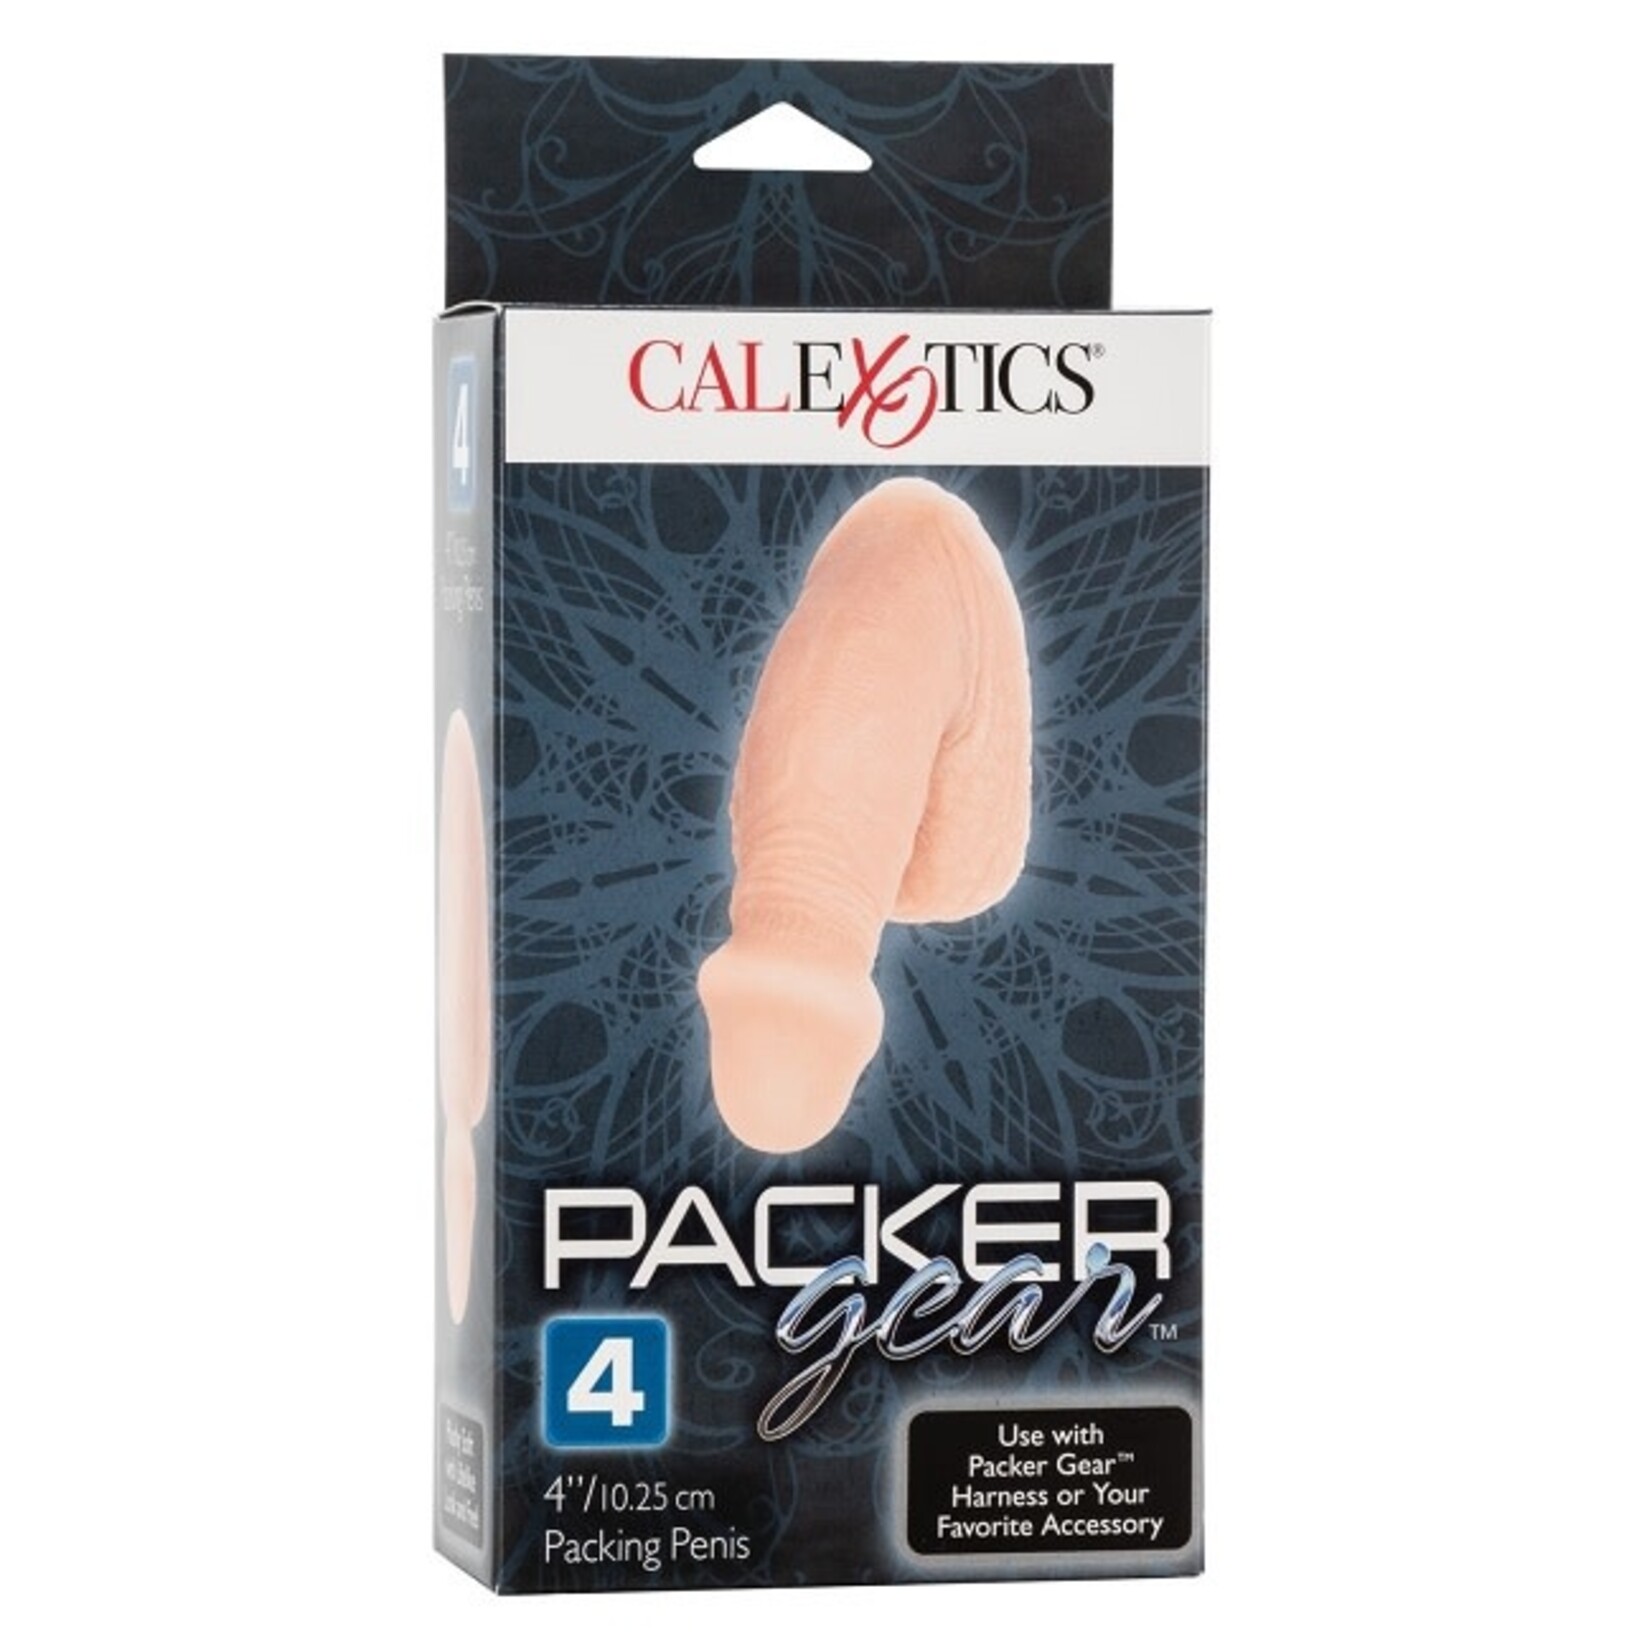 CalExotics Packer Gear 4" Packing Penis